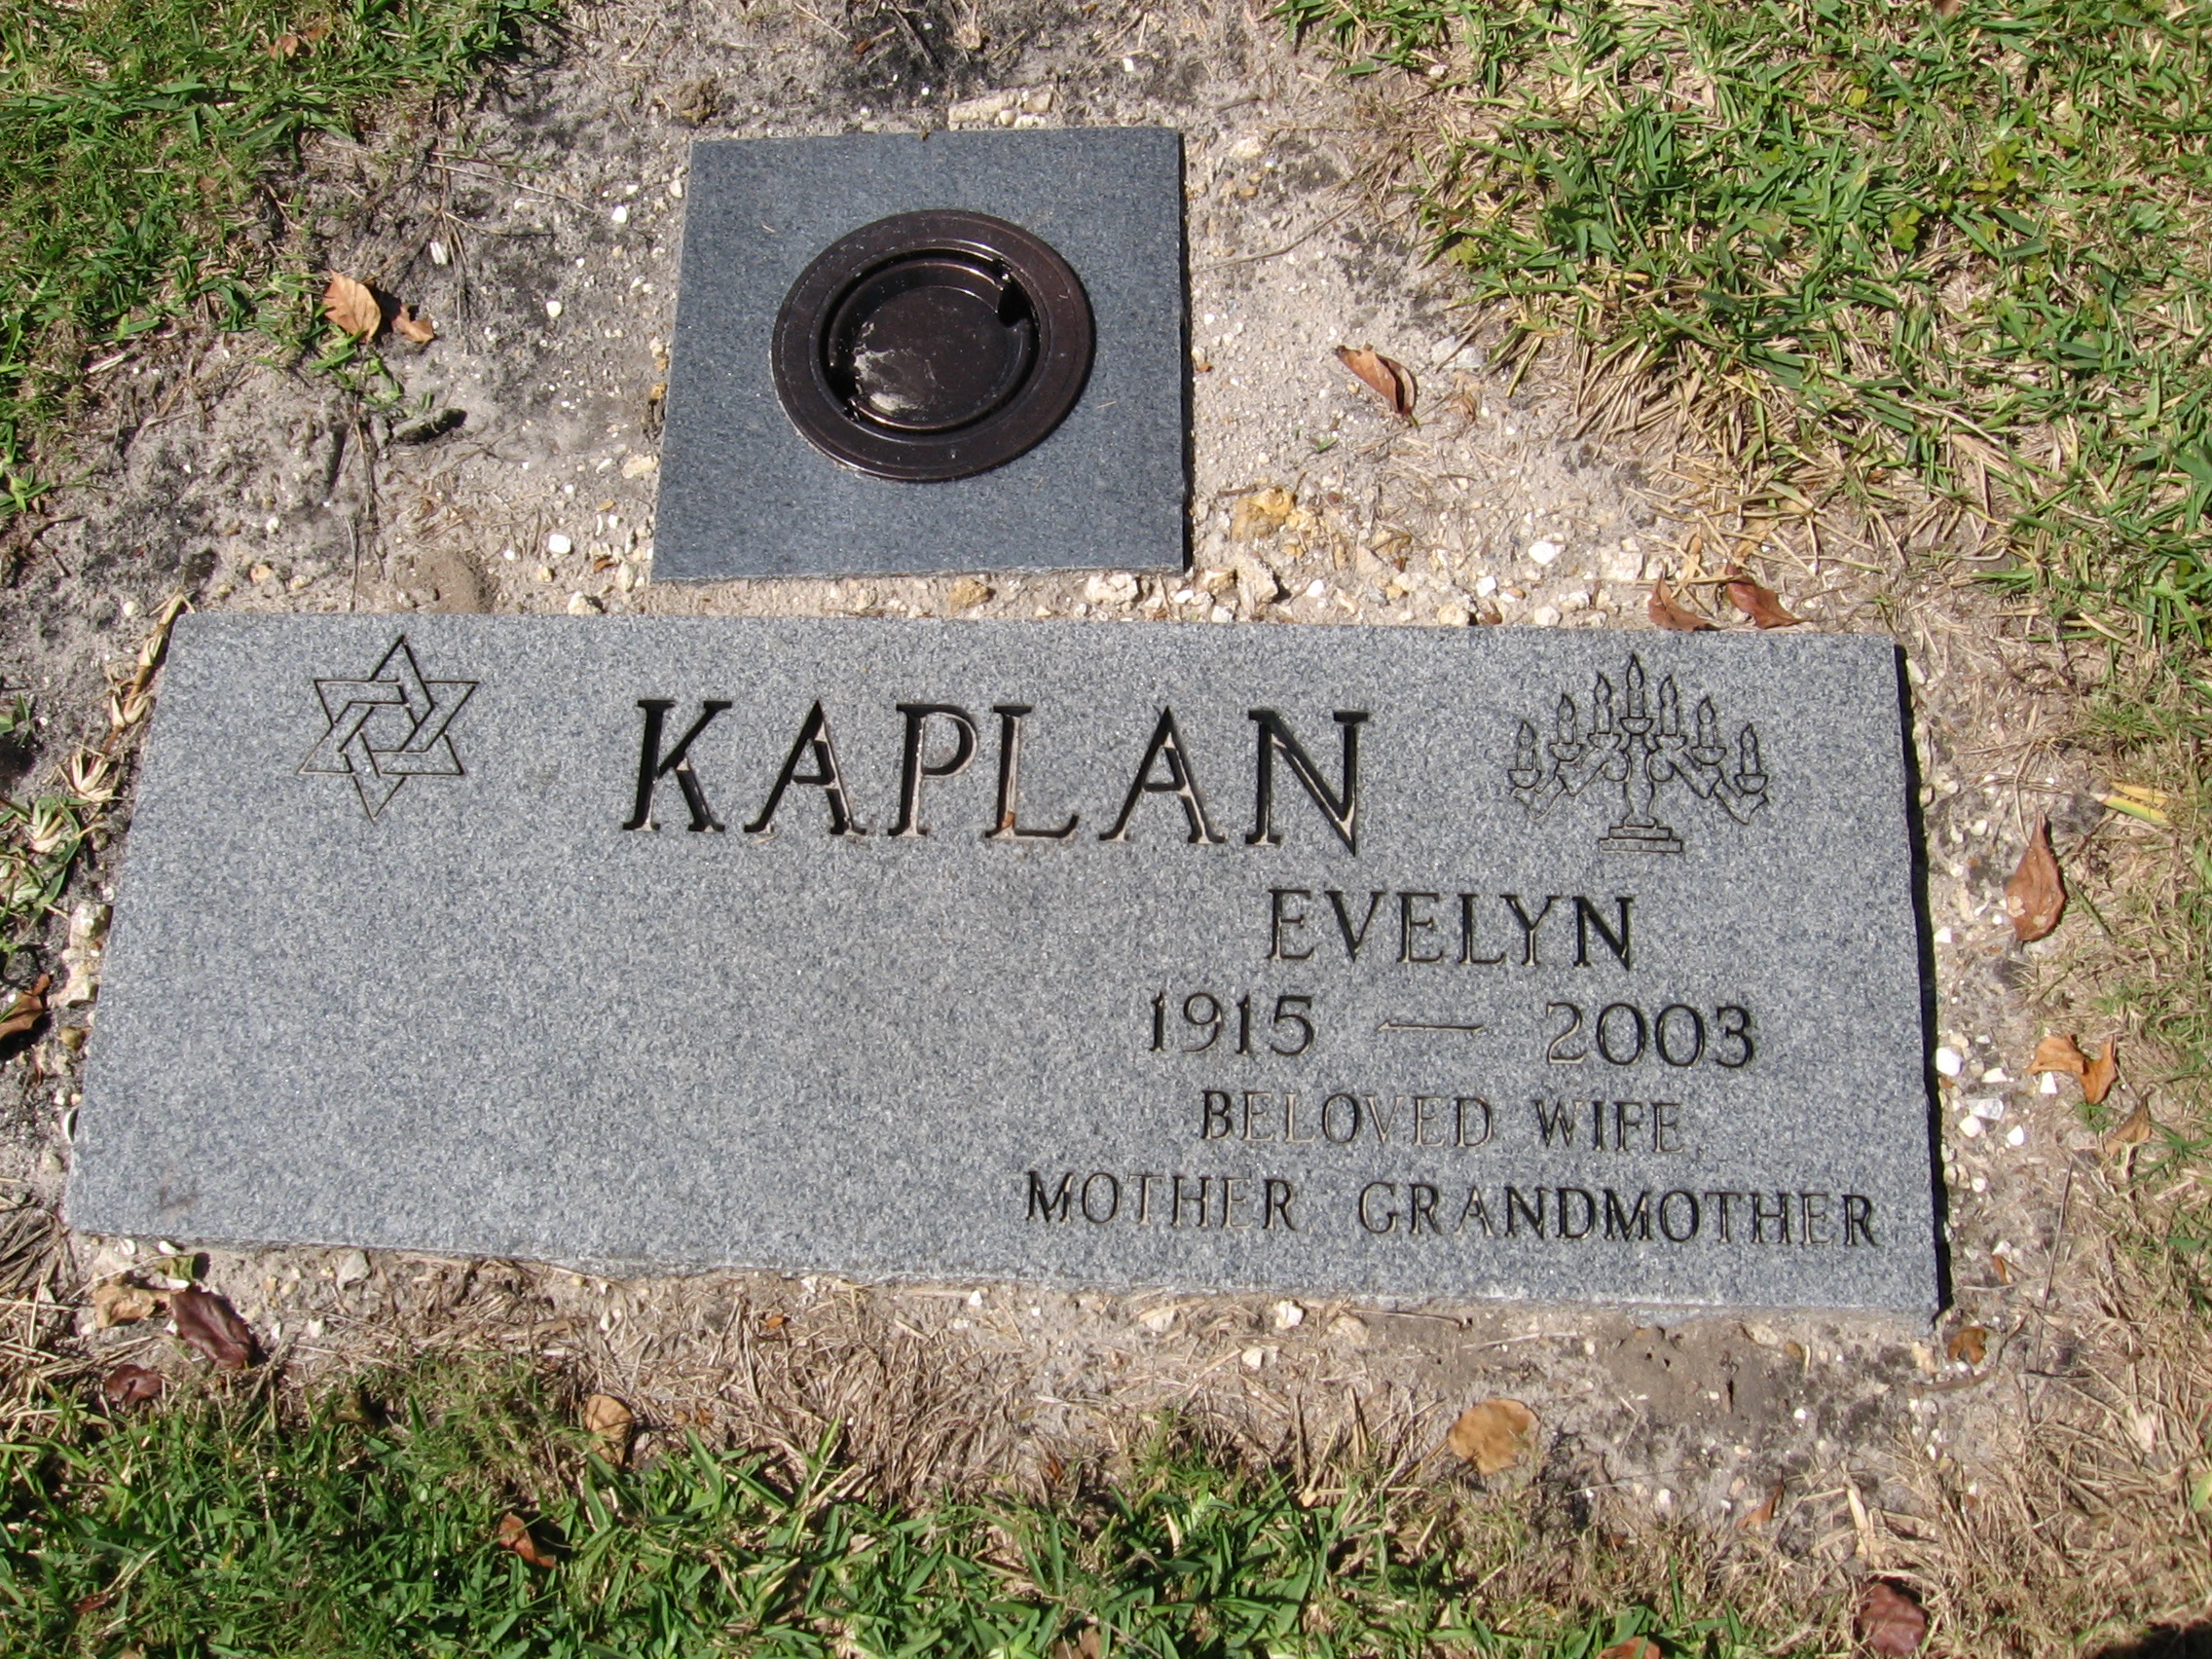 Evelyn Kaplan